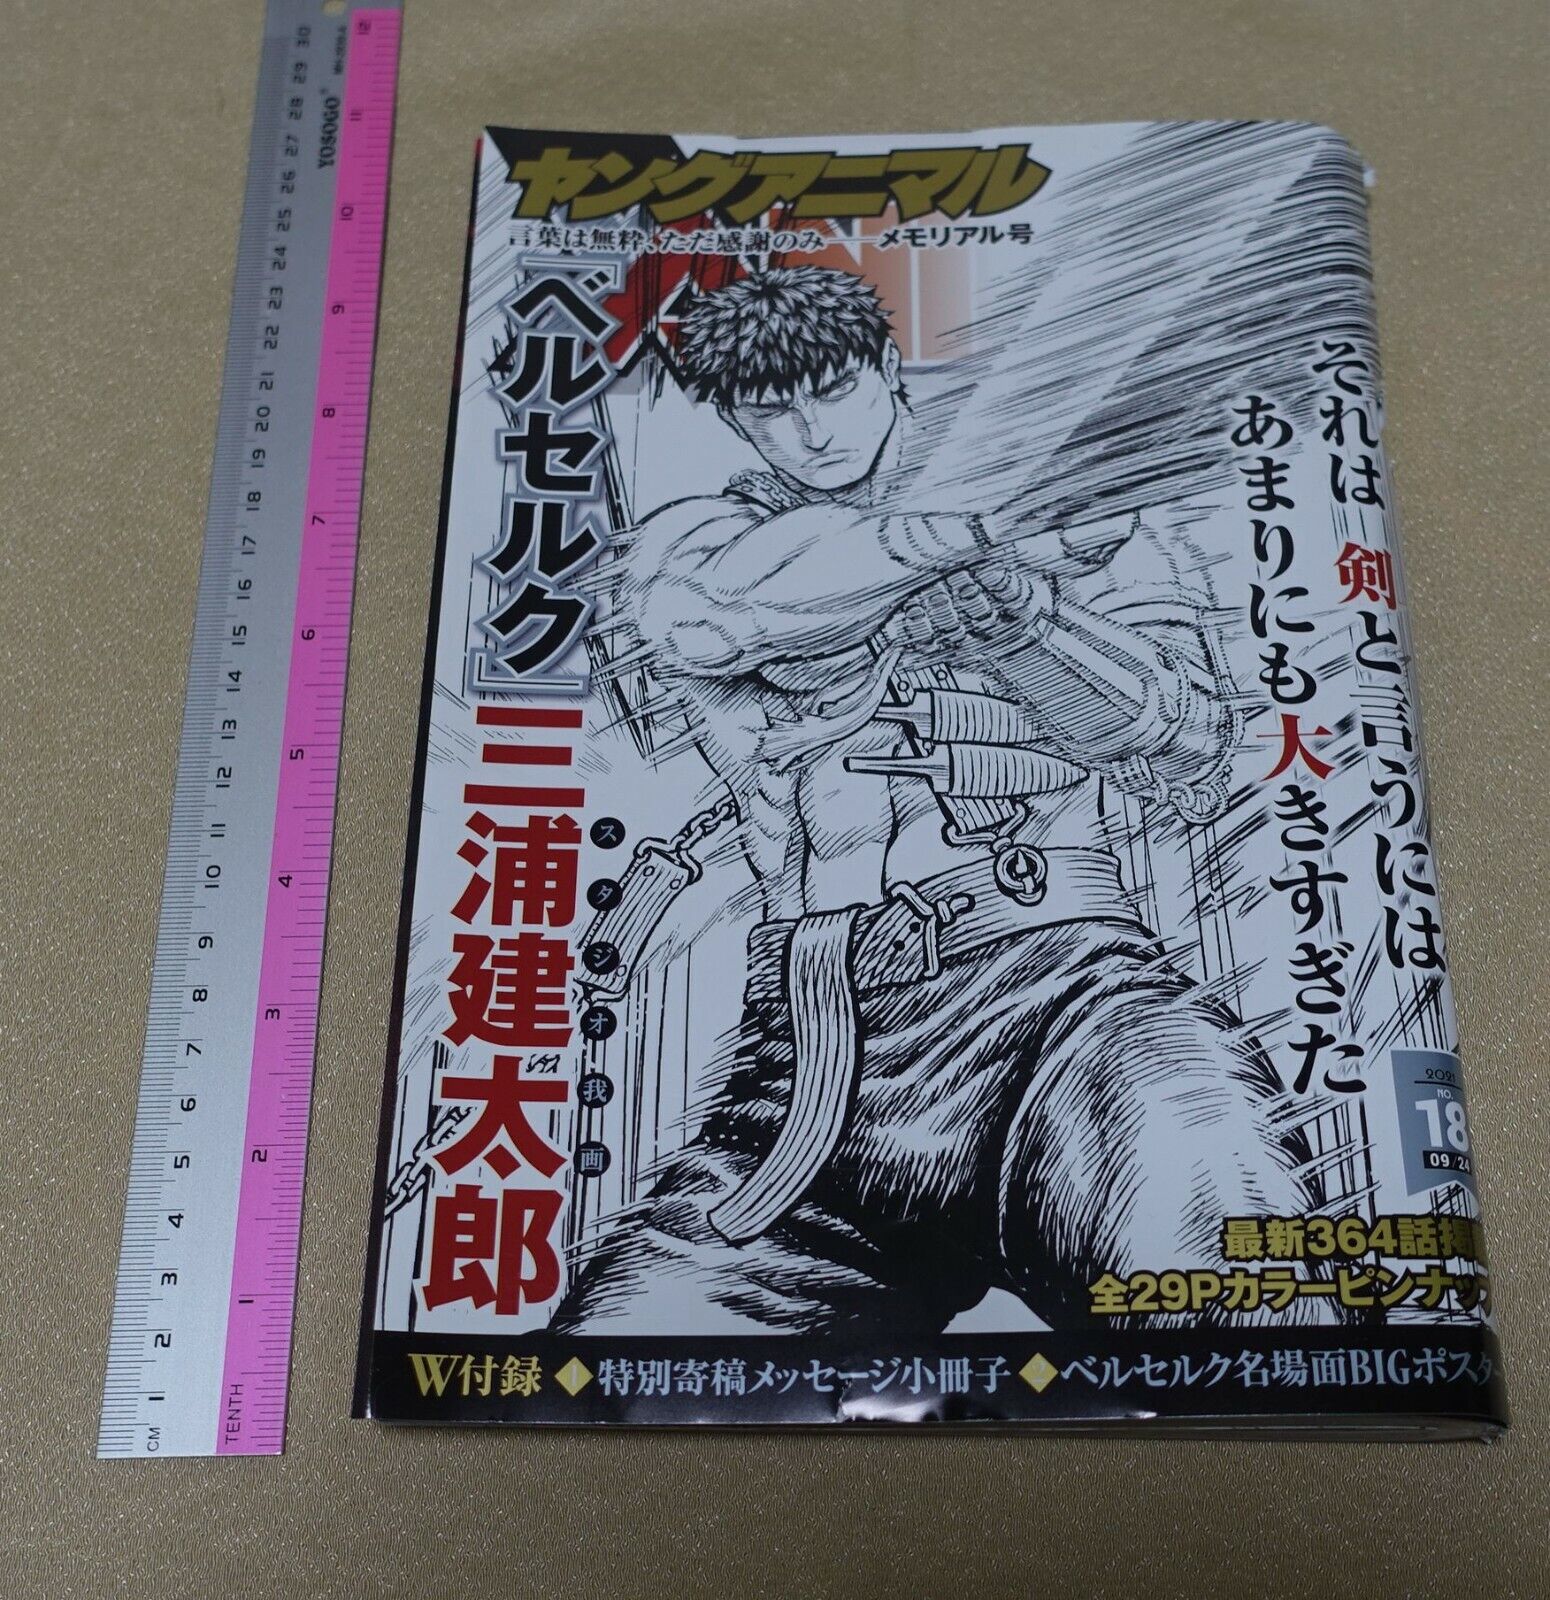 New Berserk The Golden Age Arc MEMORIAL EDITION 3 Blu-ray+3 CD+Booklet+Box  Japan